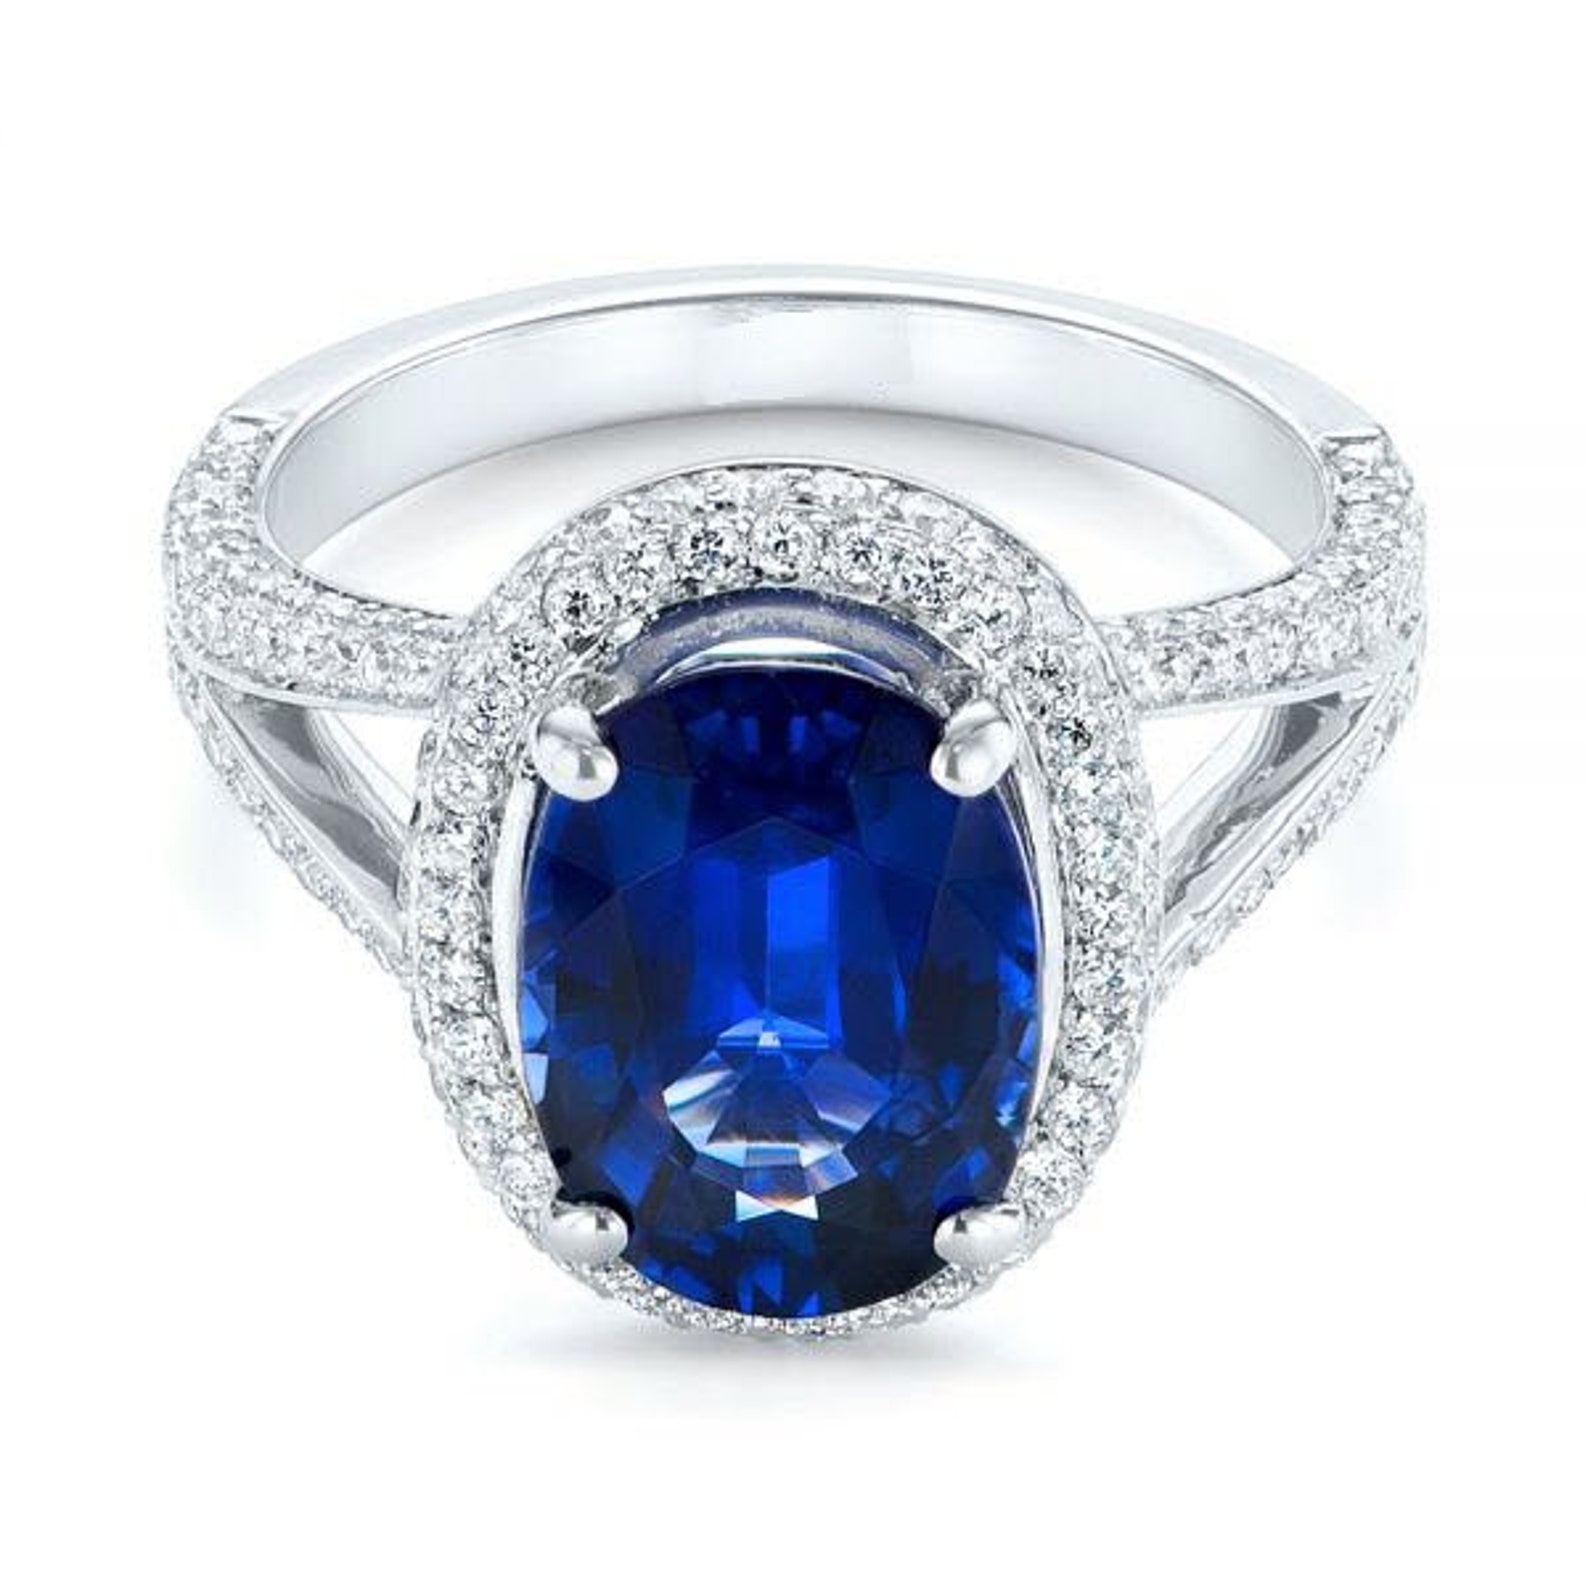 Vintage Art Deco Blue Sapphire Engagement Ring 14k White Gold | Etsy